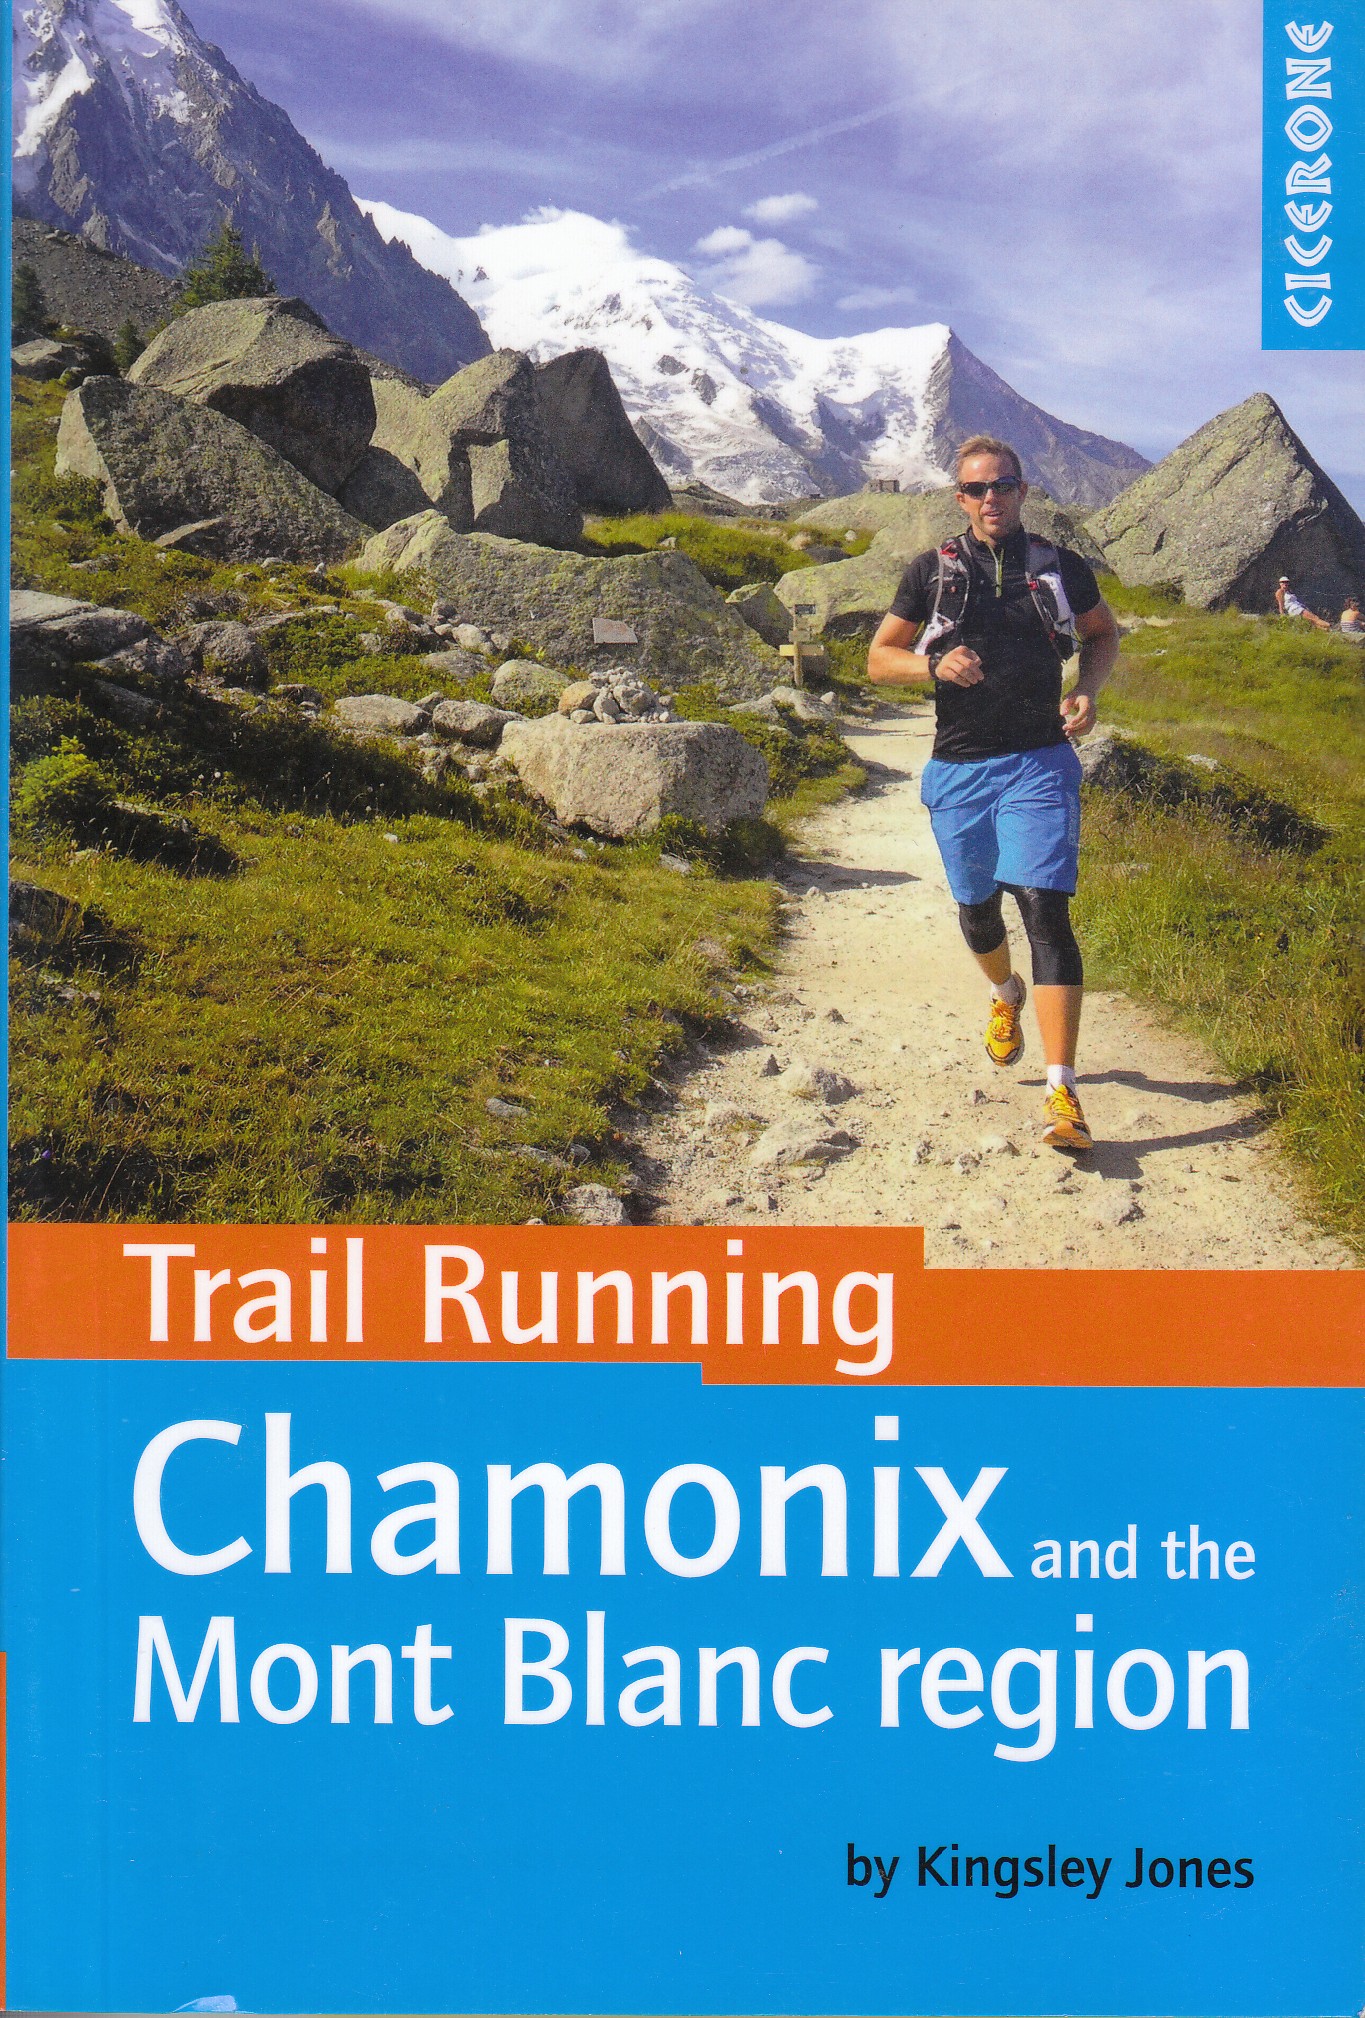 Trail Running Chamonix and the Mont Blanc region